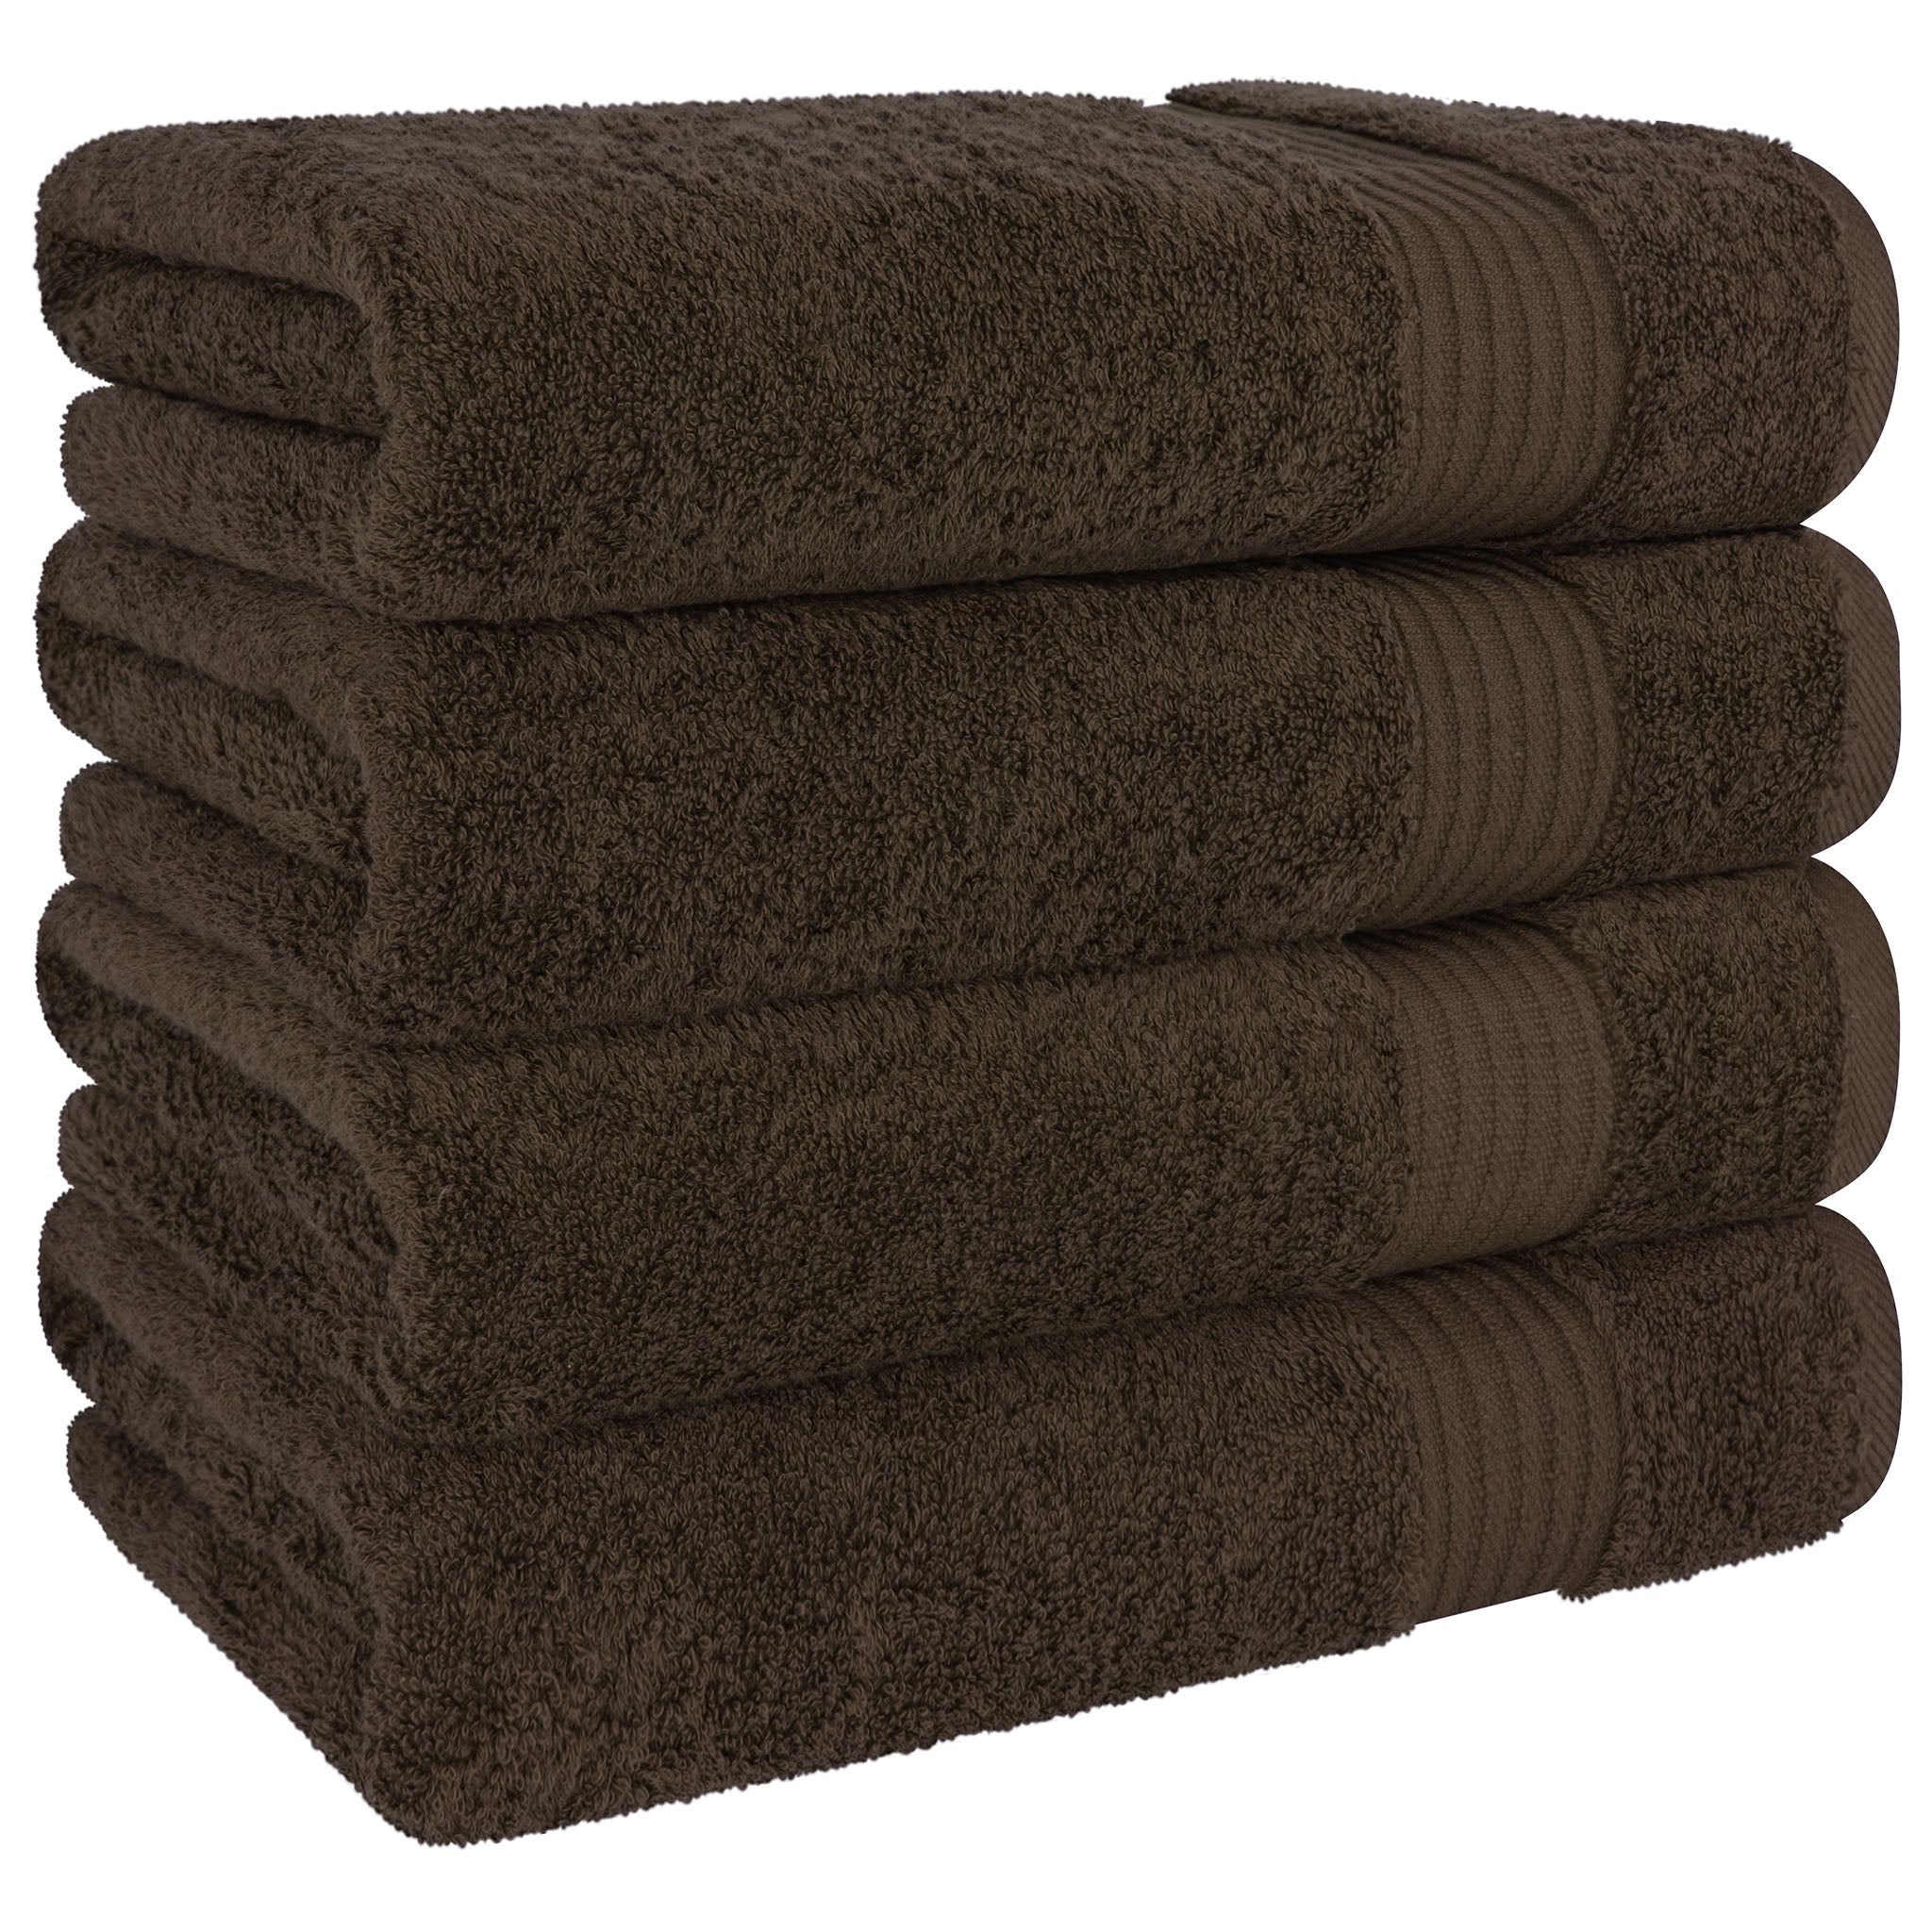 American Soft Linen Bekos 100% Cotton Turkish Towels, 4 Piece Bath Towel Set -chocolate-brown-05